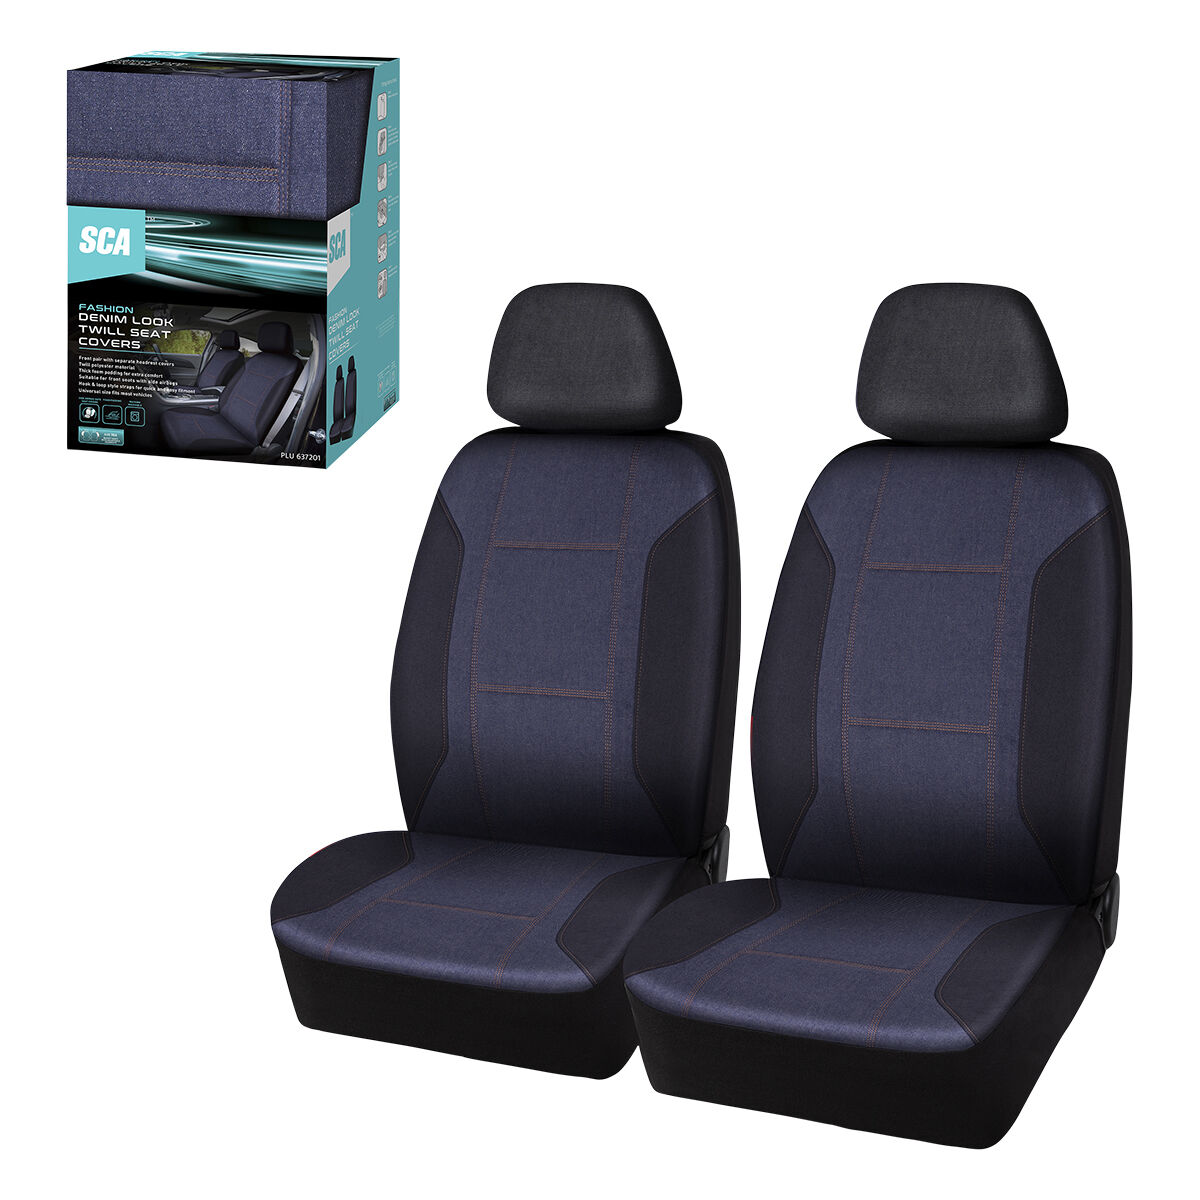 4-in-1 Canopy Car Seat Cover in Balsam – Natemia